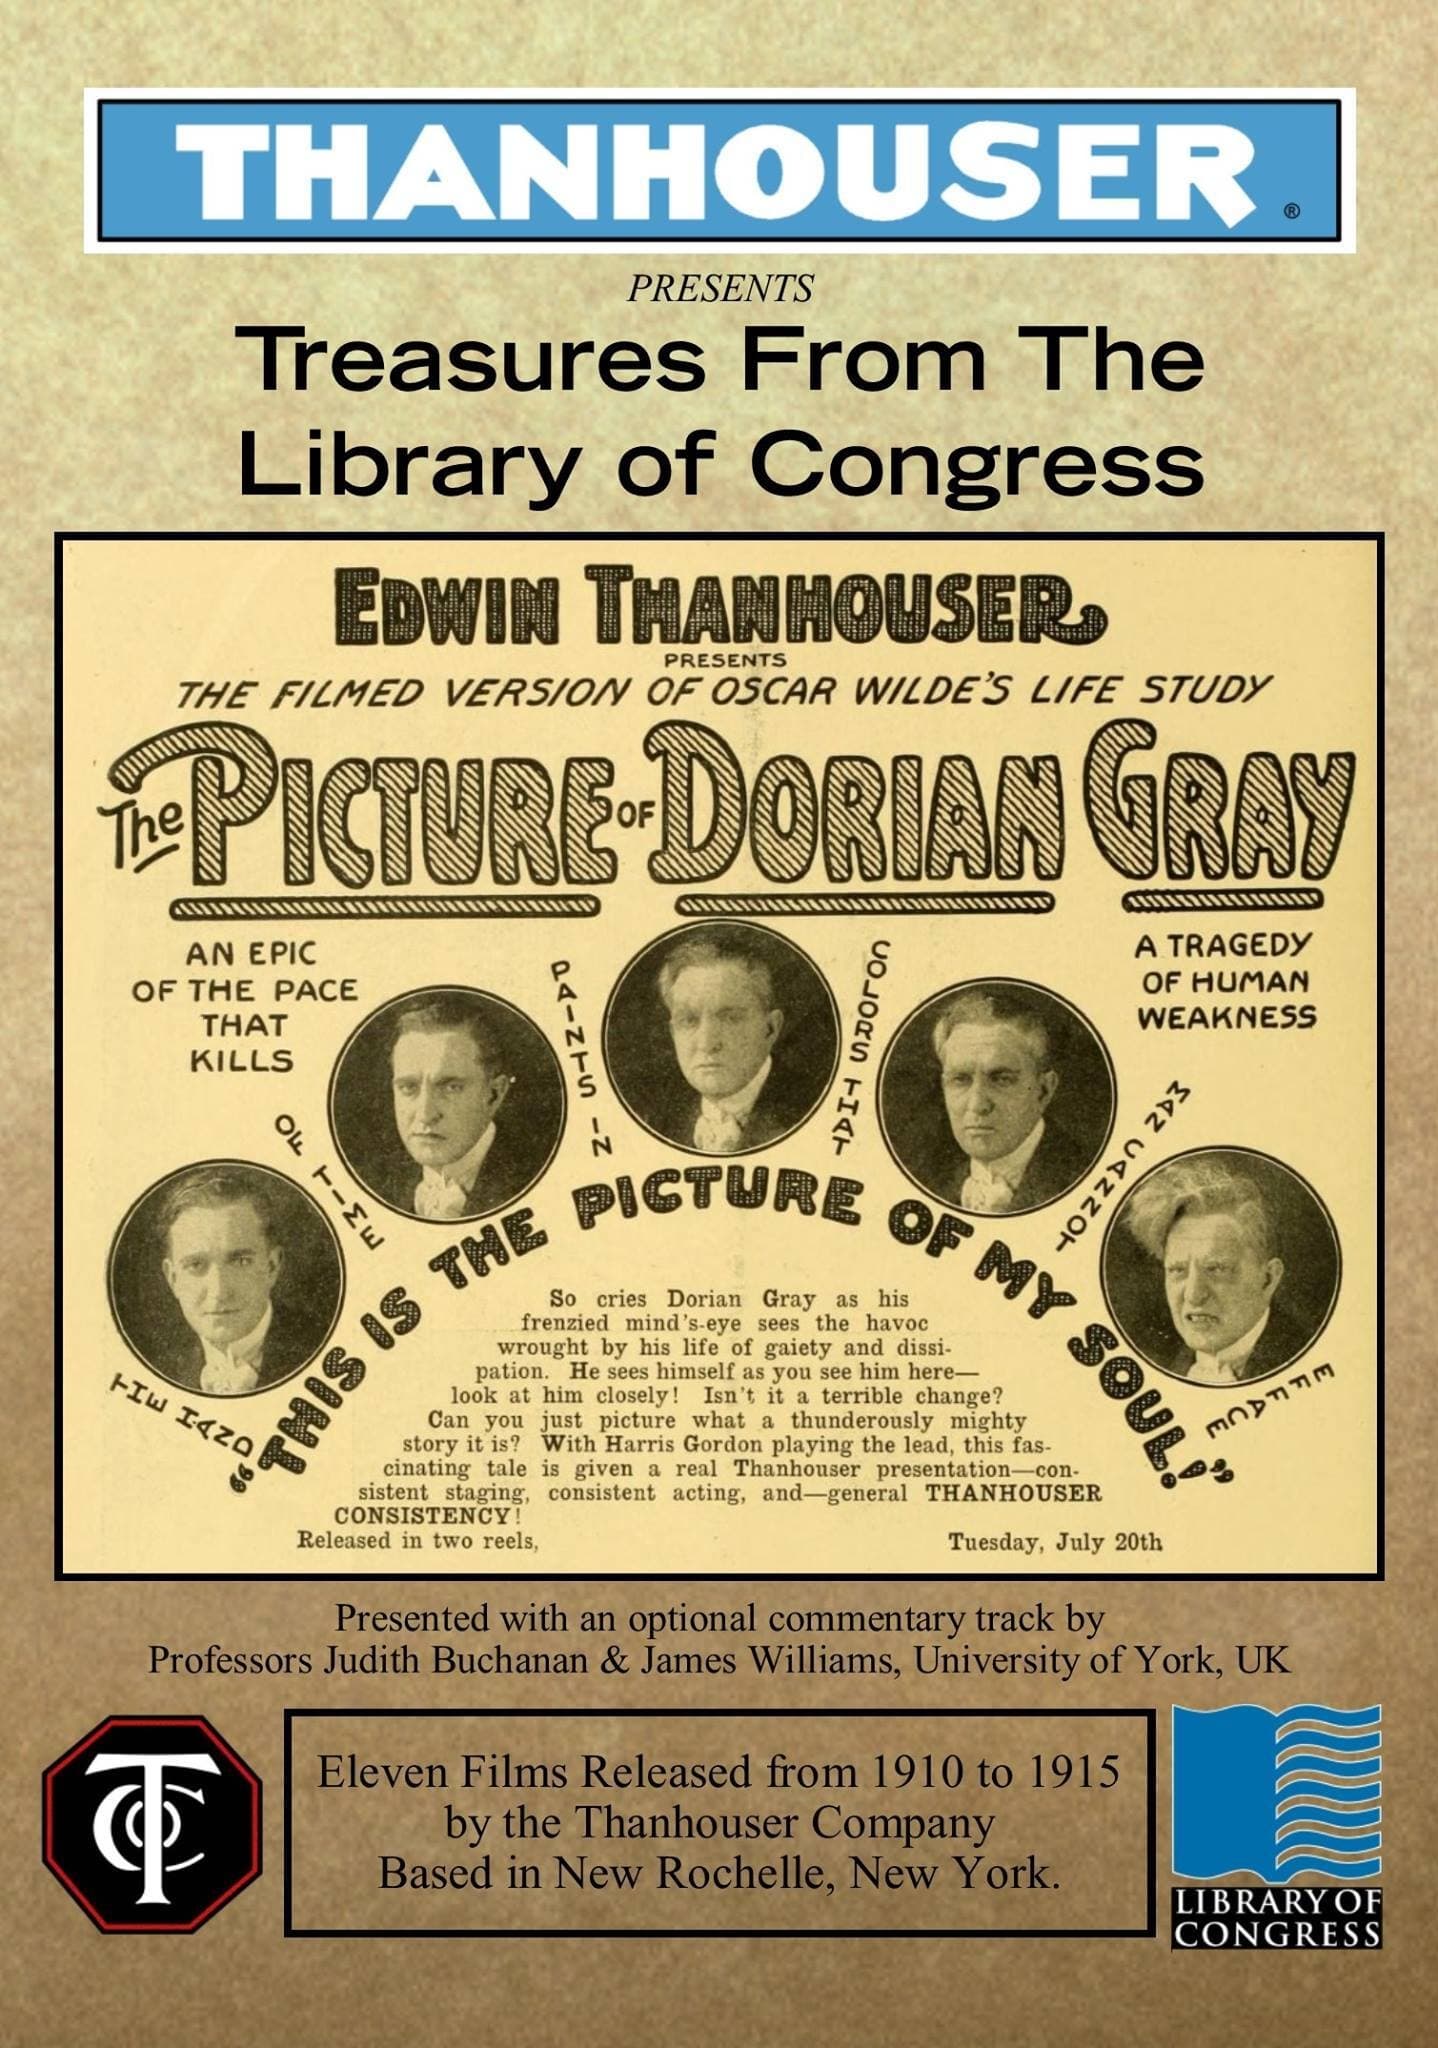 The Picture of Dorian Gray film